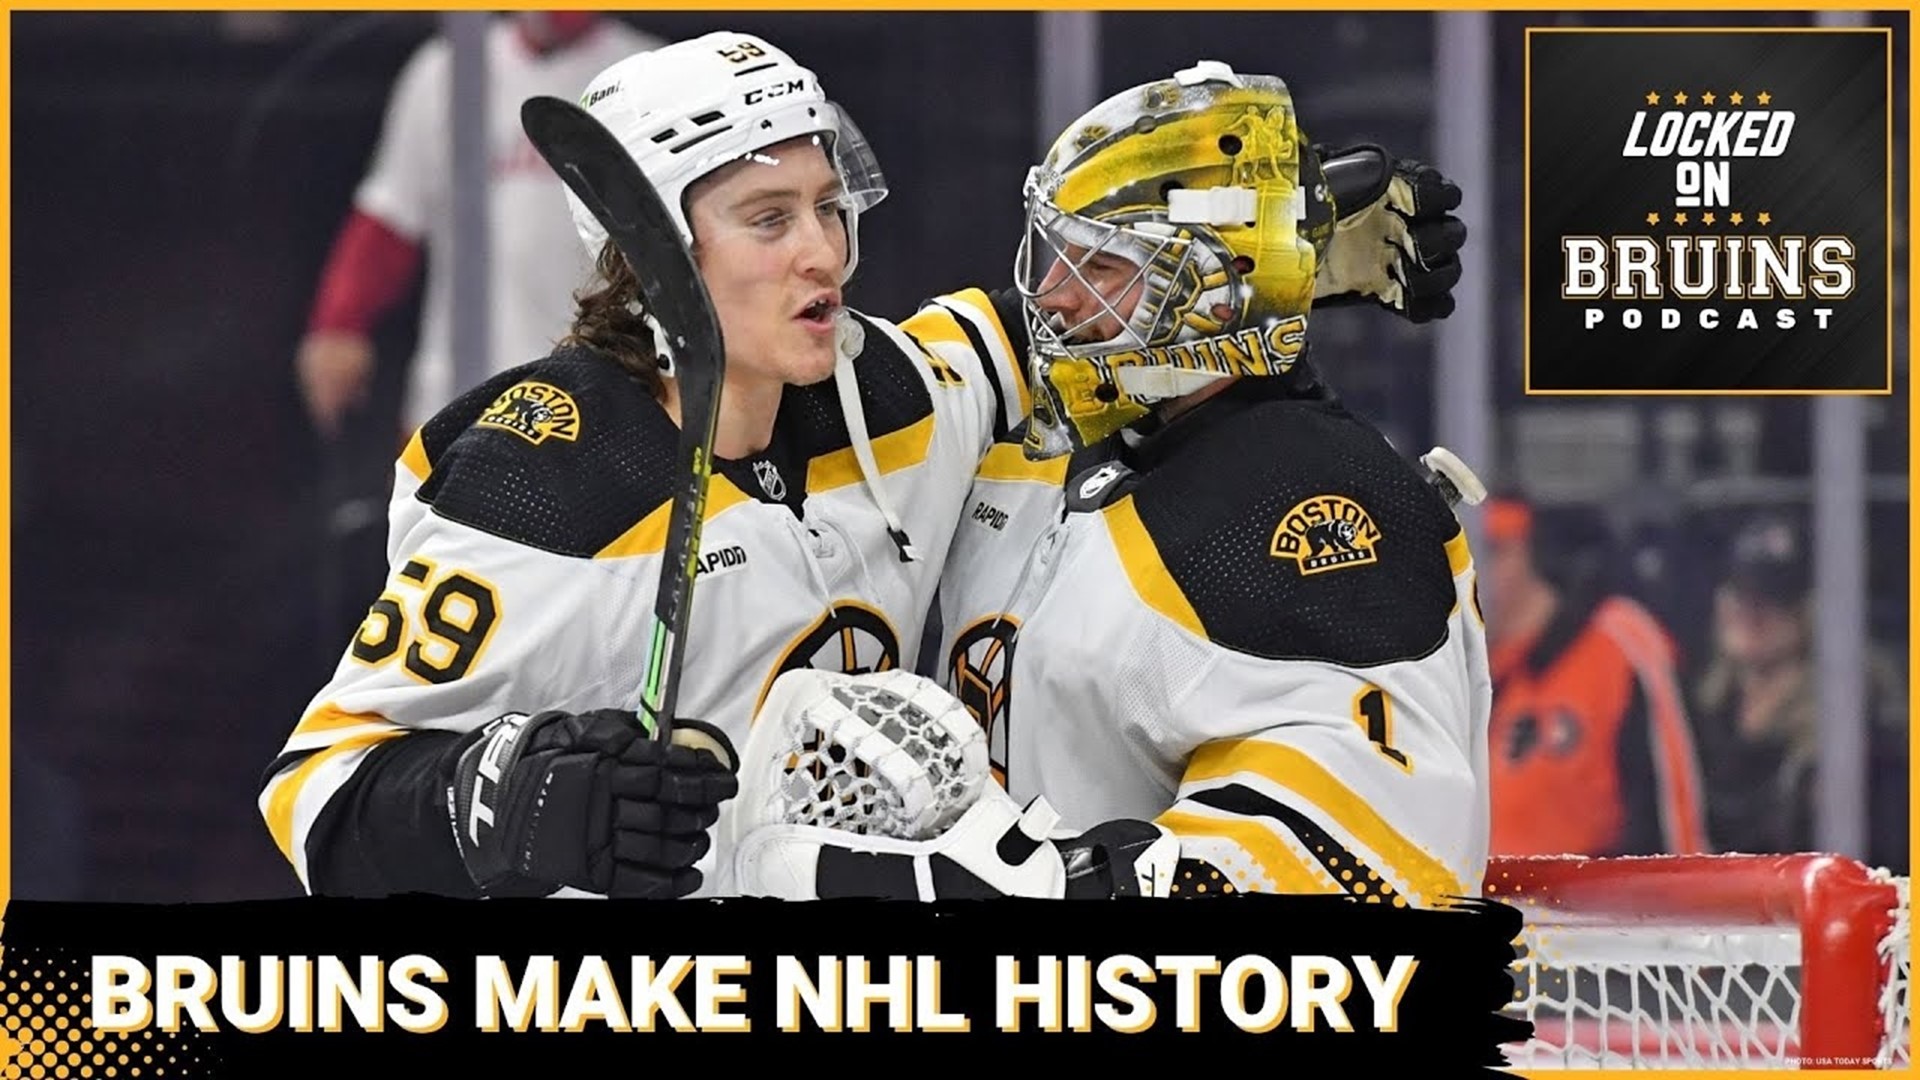 Download Pittsburgh Penguins Believe Logo Wallpaper